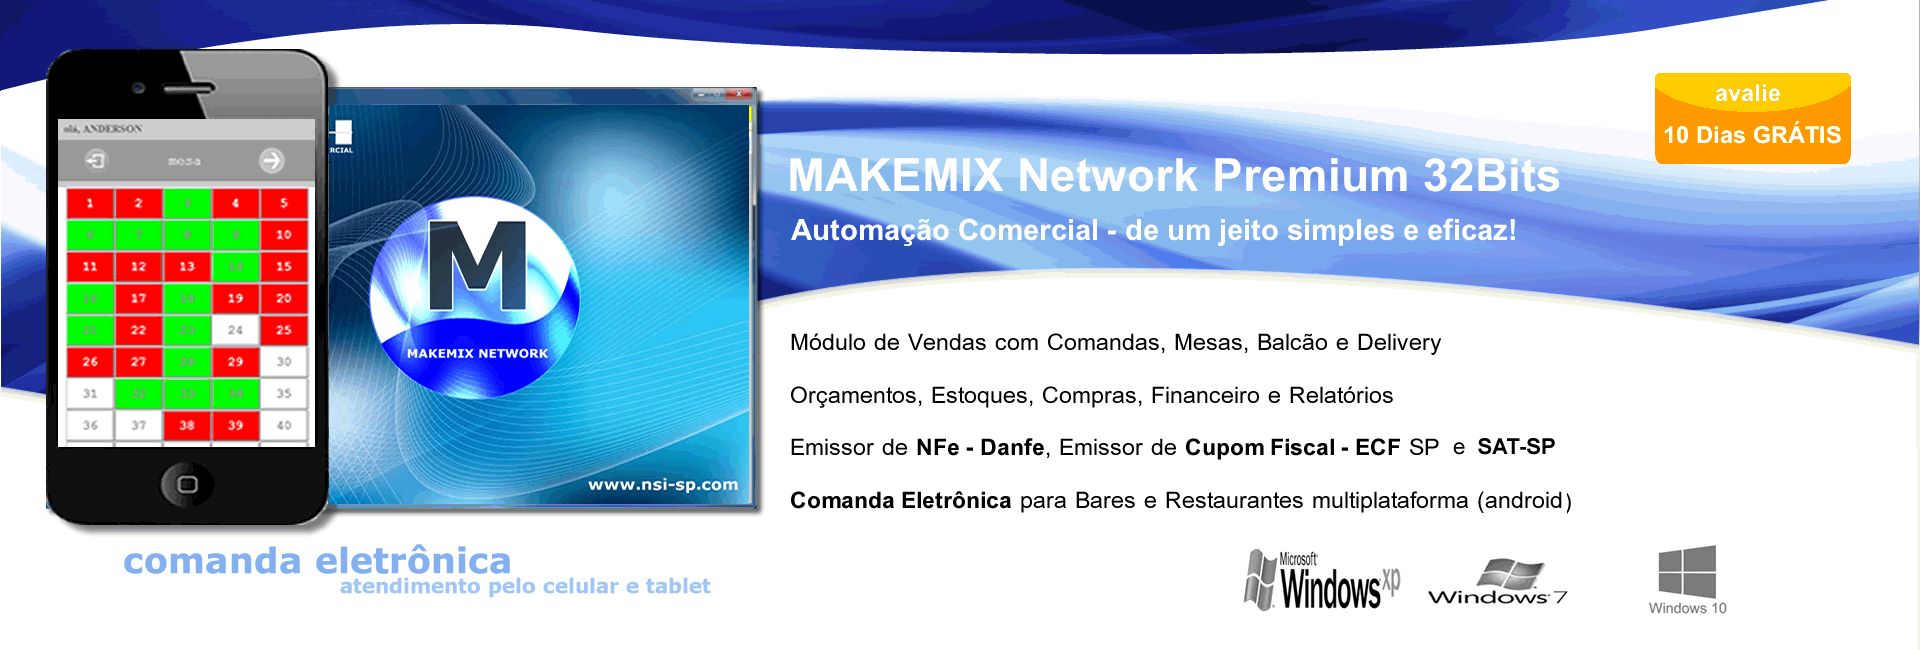 MAKEMIX Network - Automa��o comercial